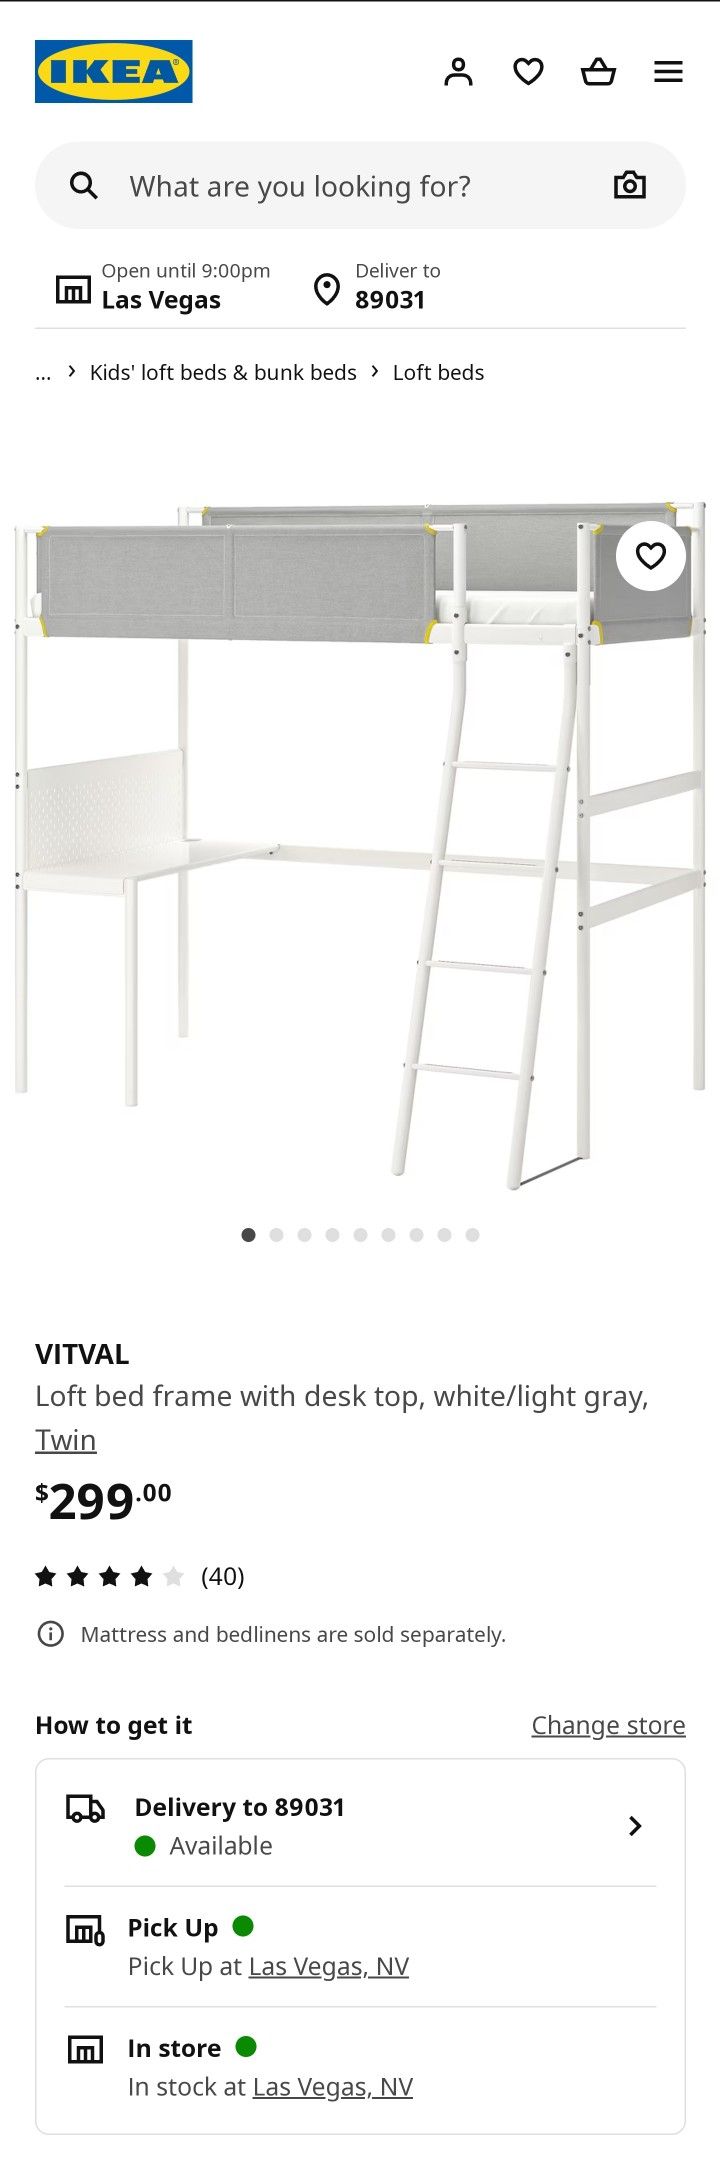 IKEA Vitval Loft Bed w/ Desks, Twin Size